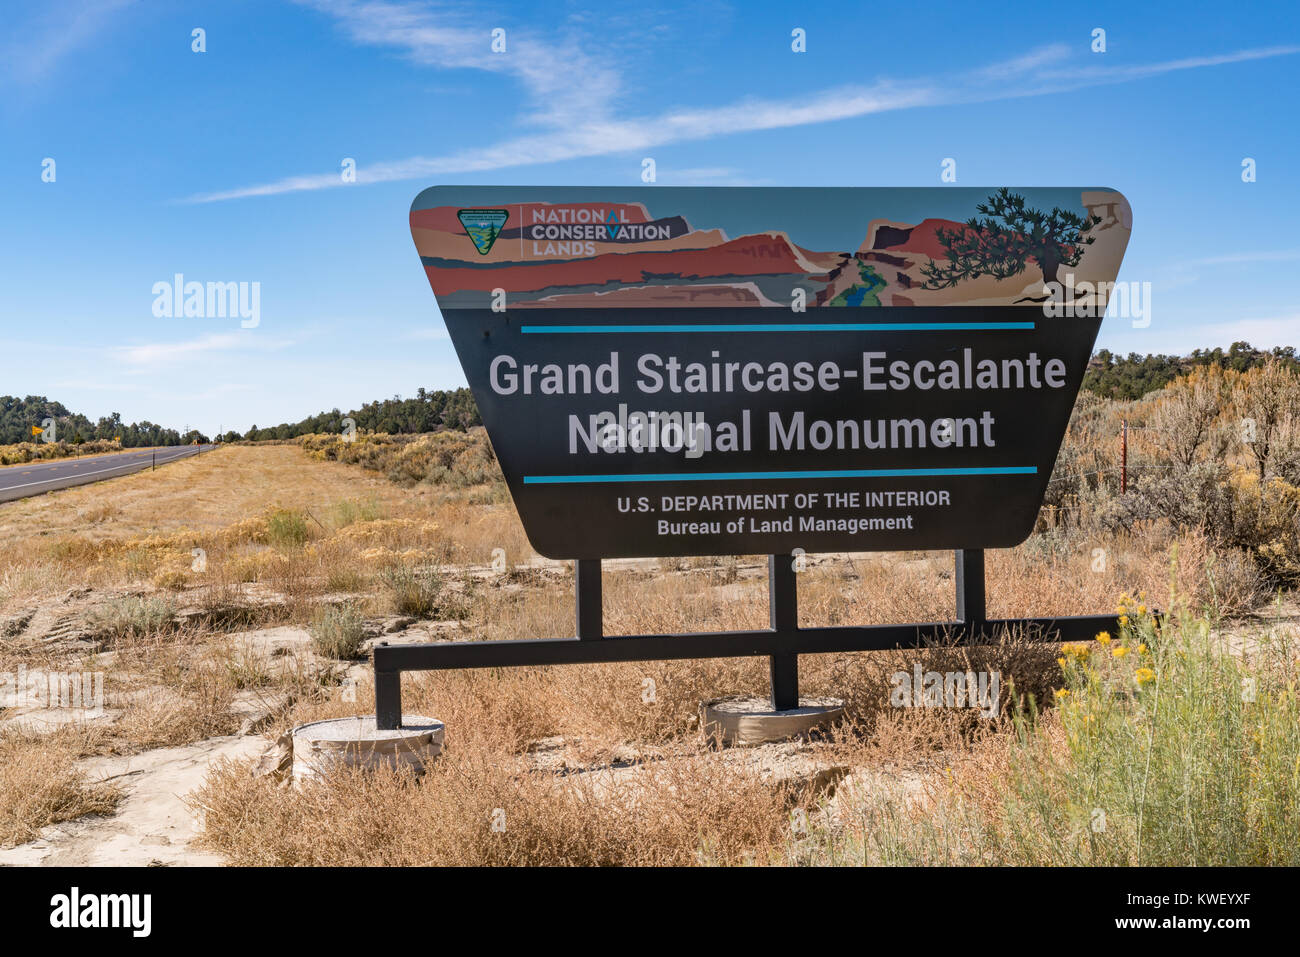 ESCALANTE, Utah - Octubre 17, 2017: Grand Staircase-Escalante National Monument firmar a lo largo de la carretera escénica ruta 12 en Utah Foto de stock